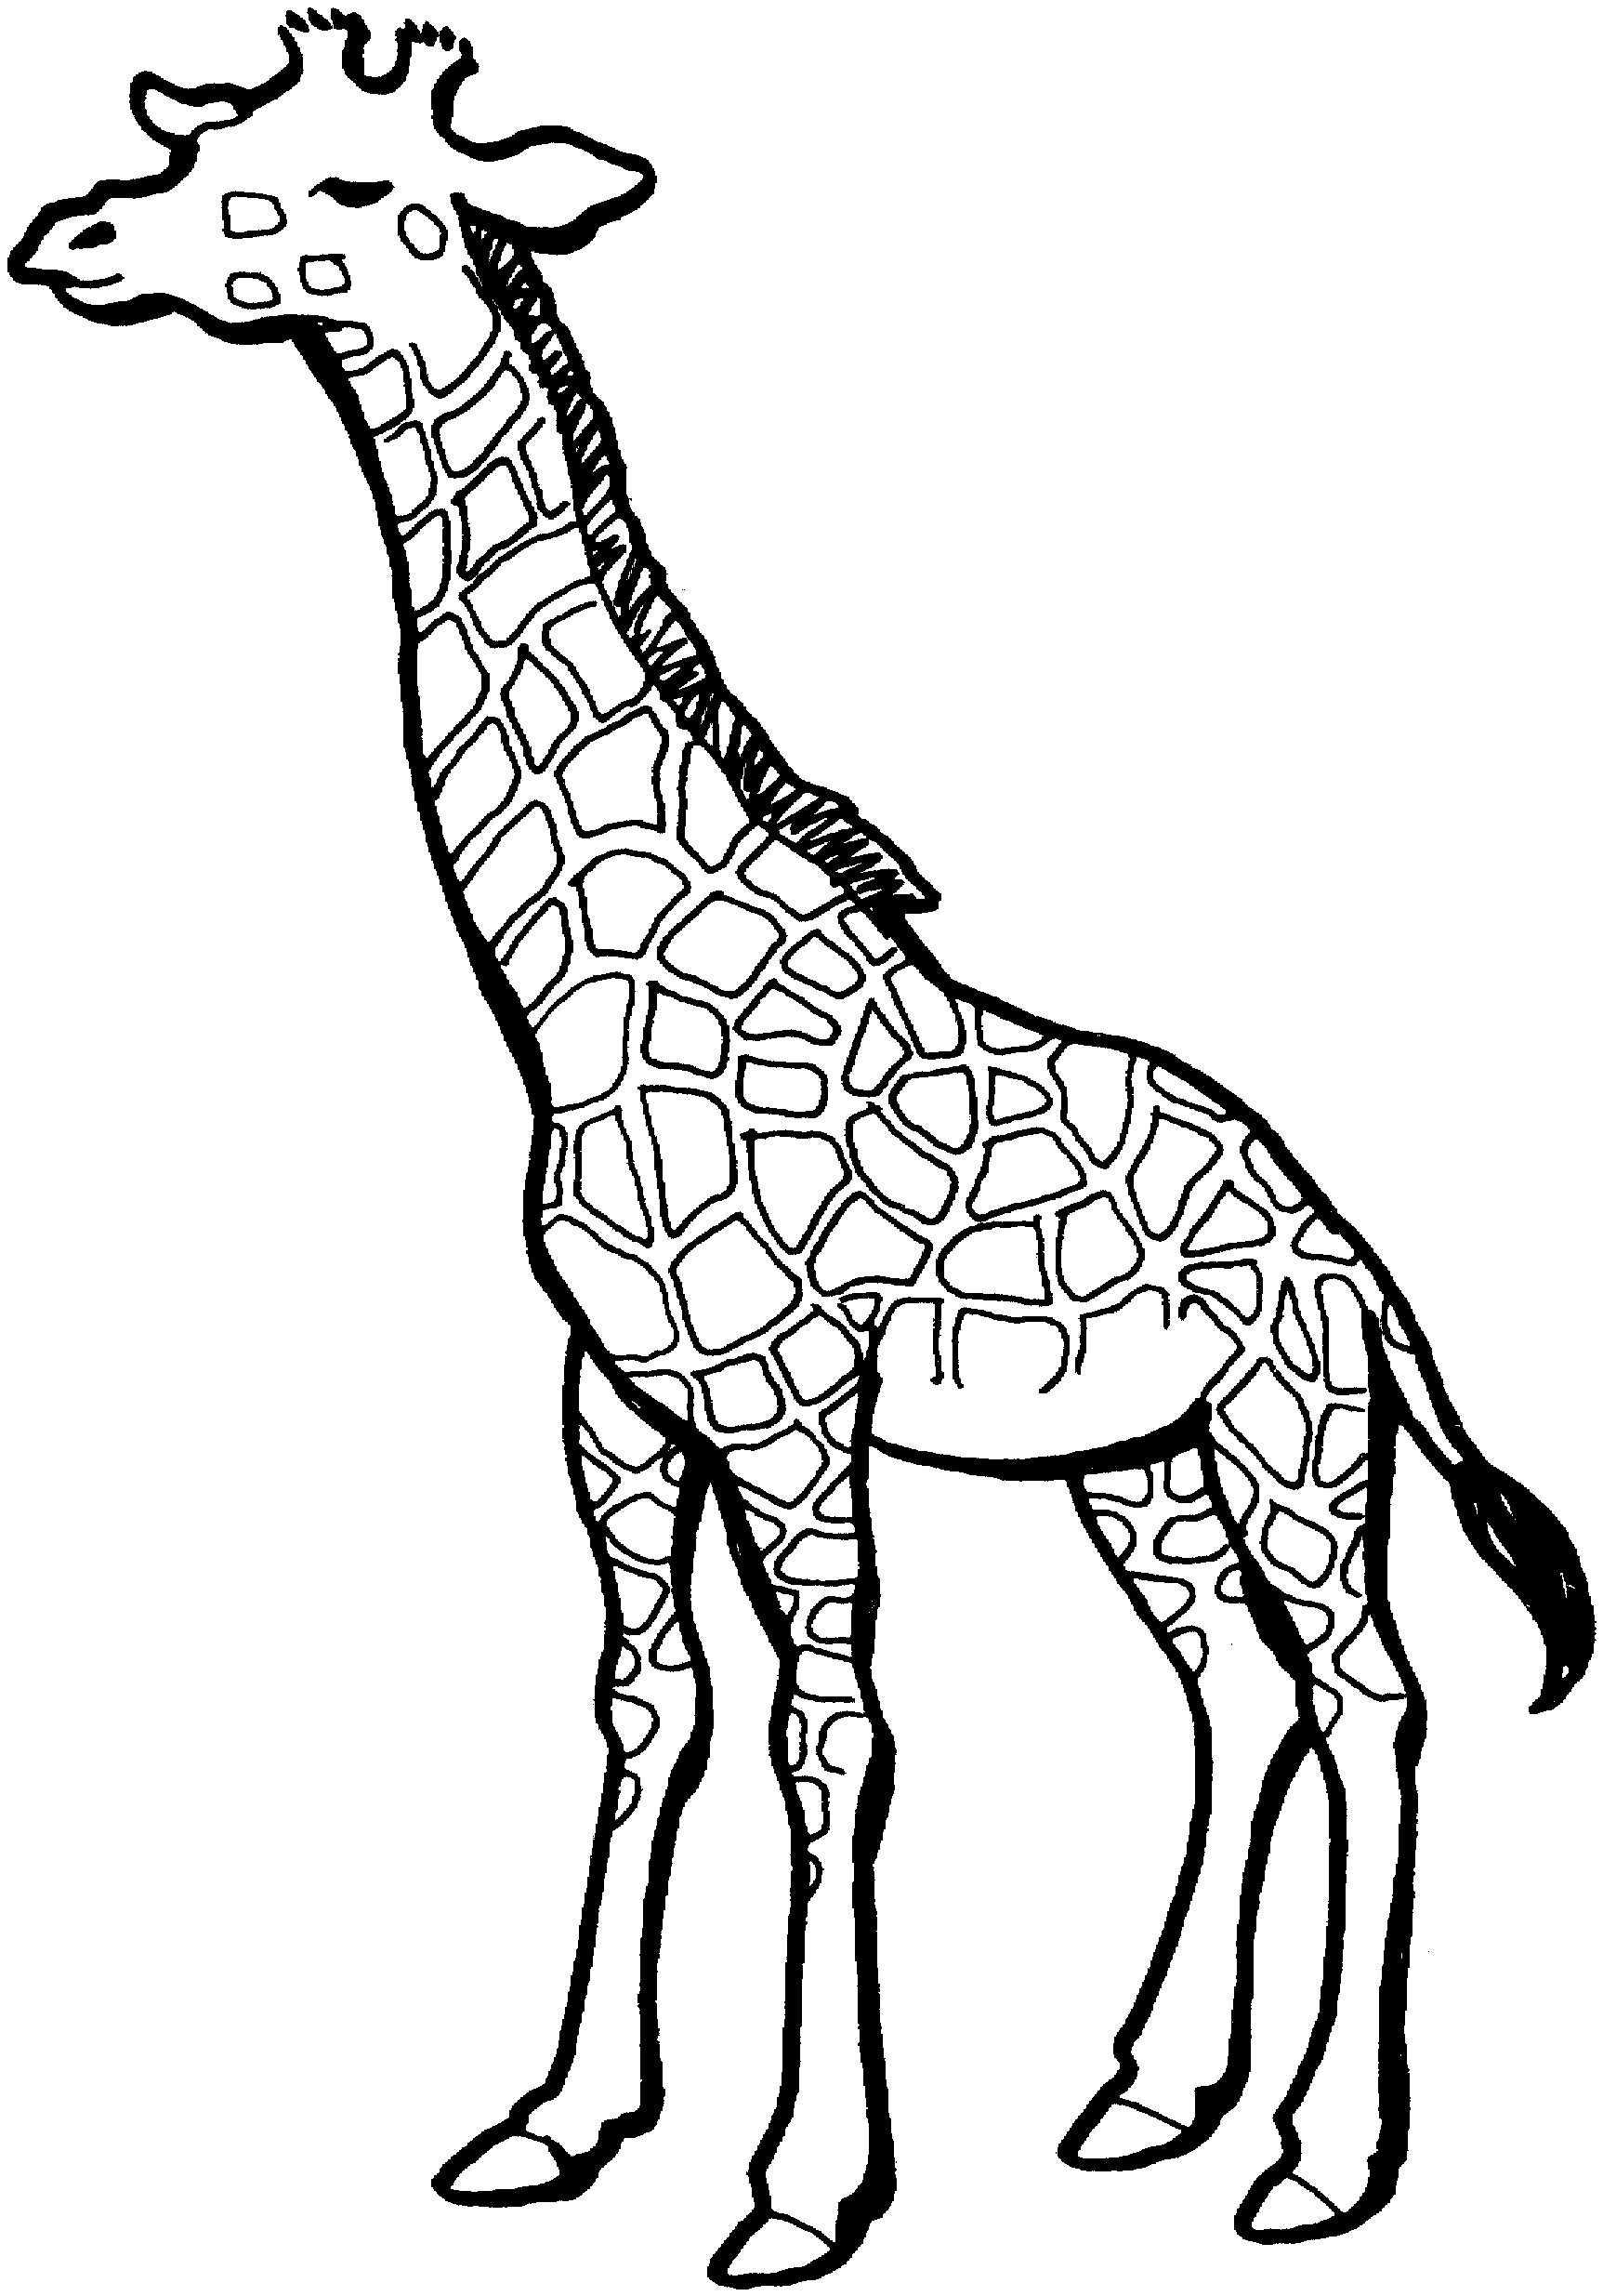 colouring sheet giraffe giraffes coloring pages sheet colouring giraffe 